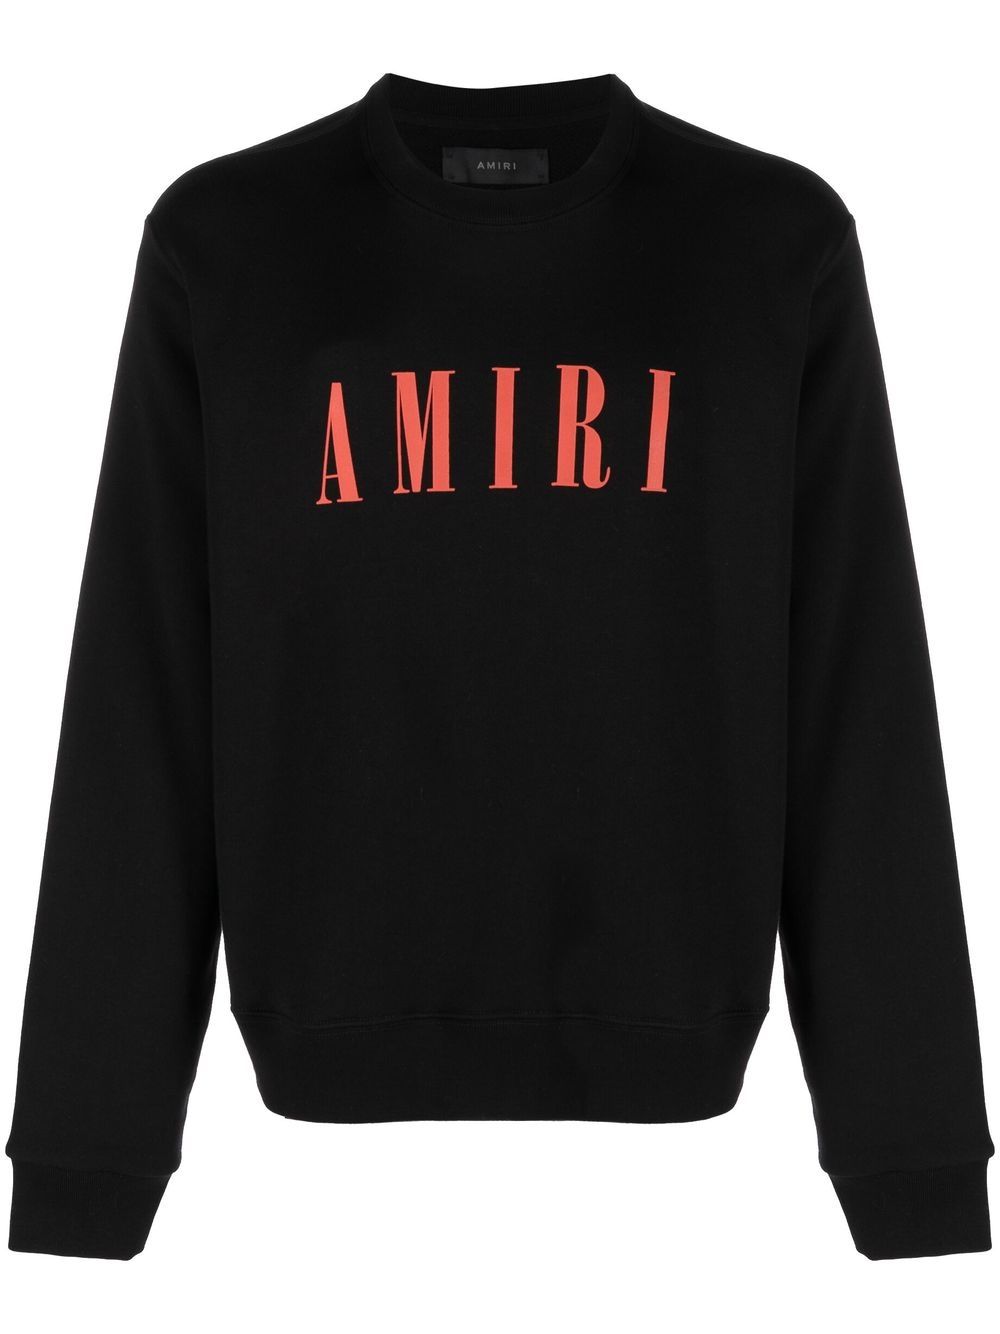 Amiri logo luxury sweatshirt for rent